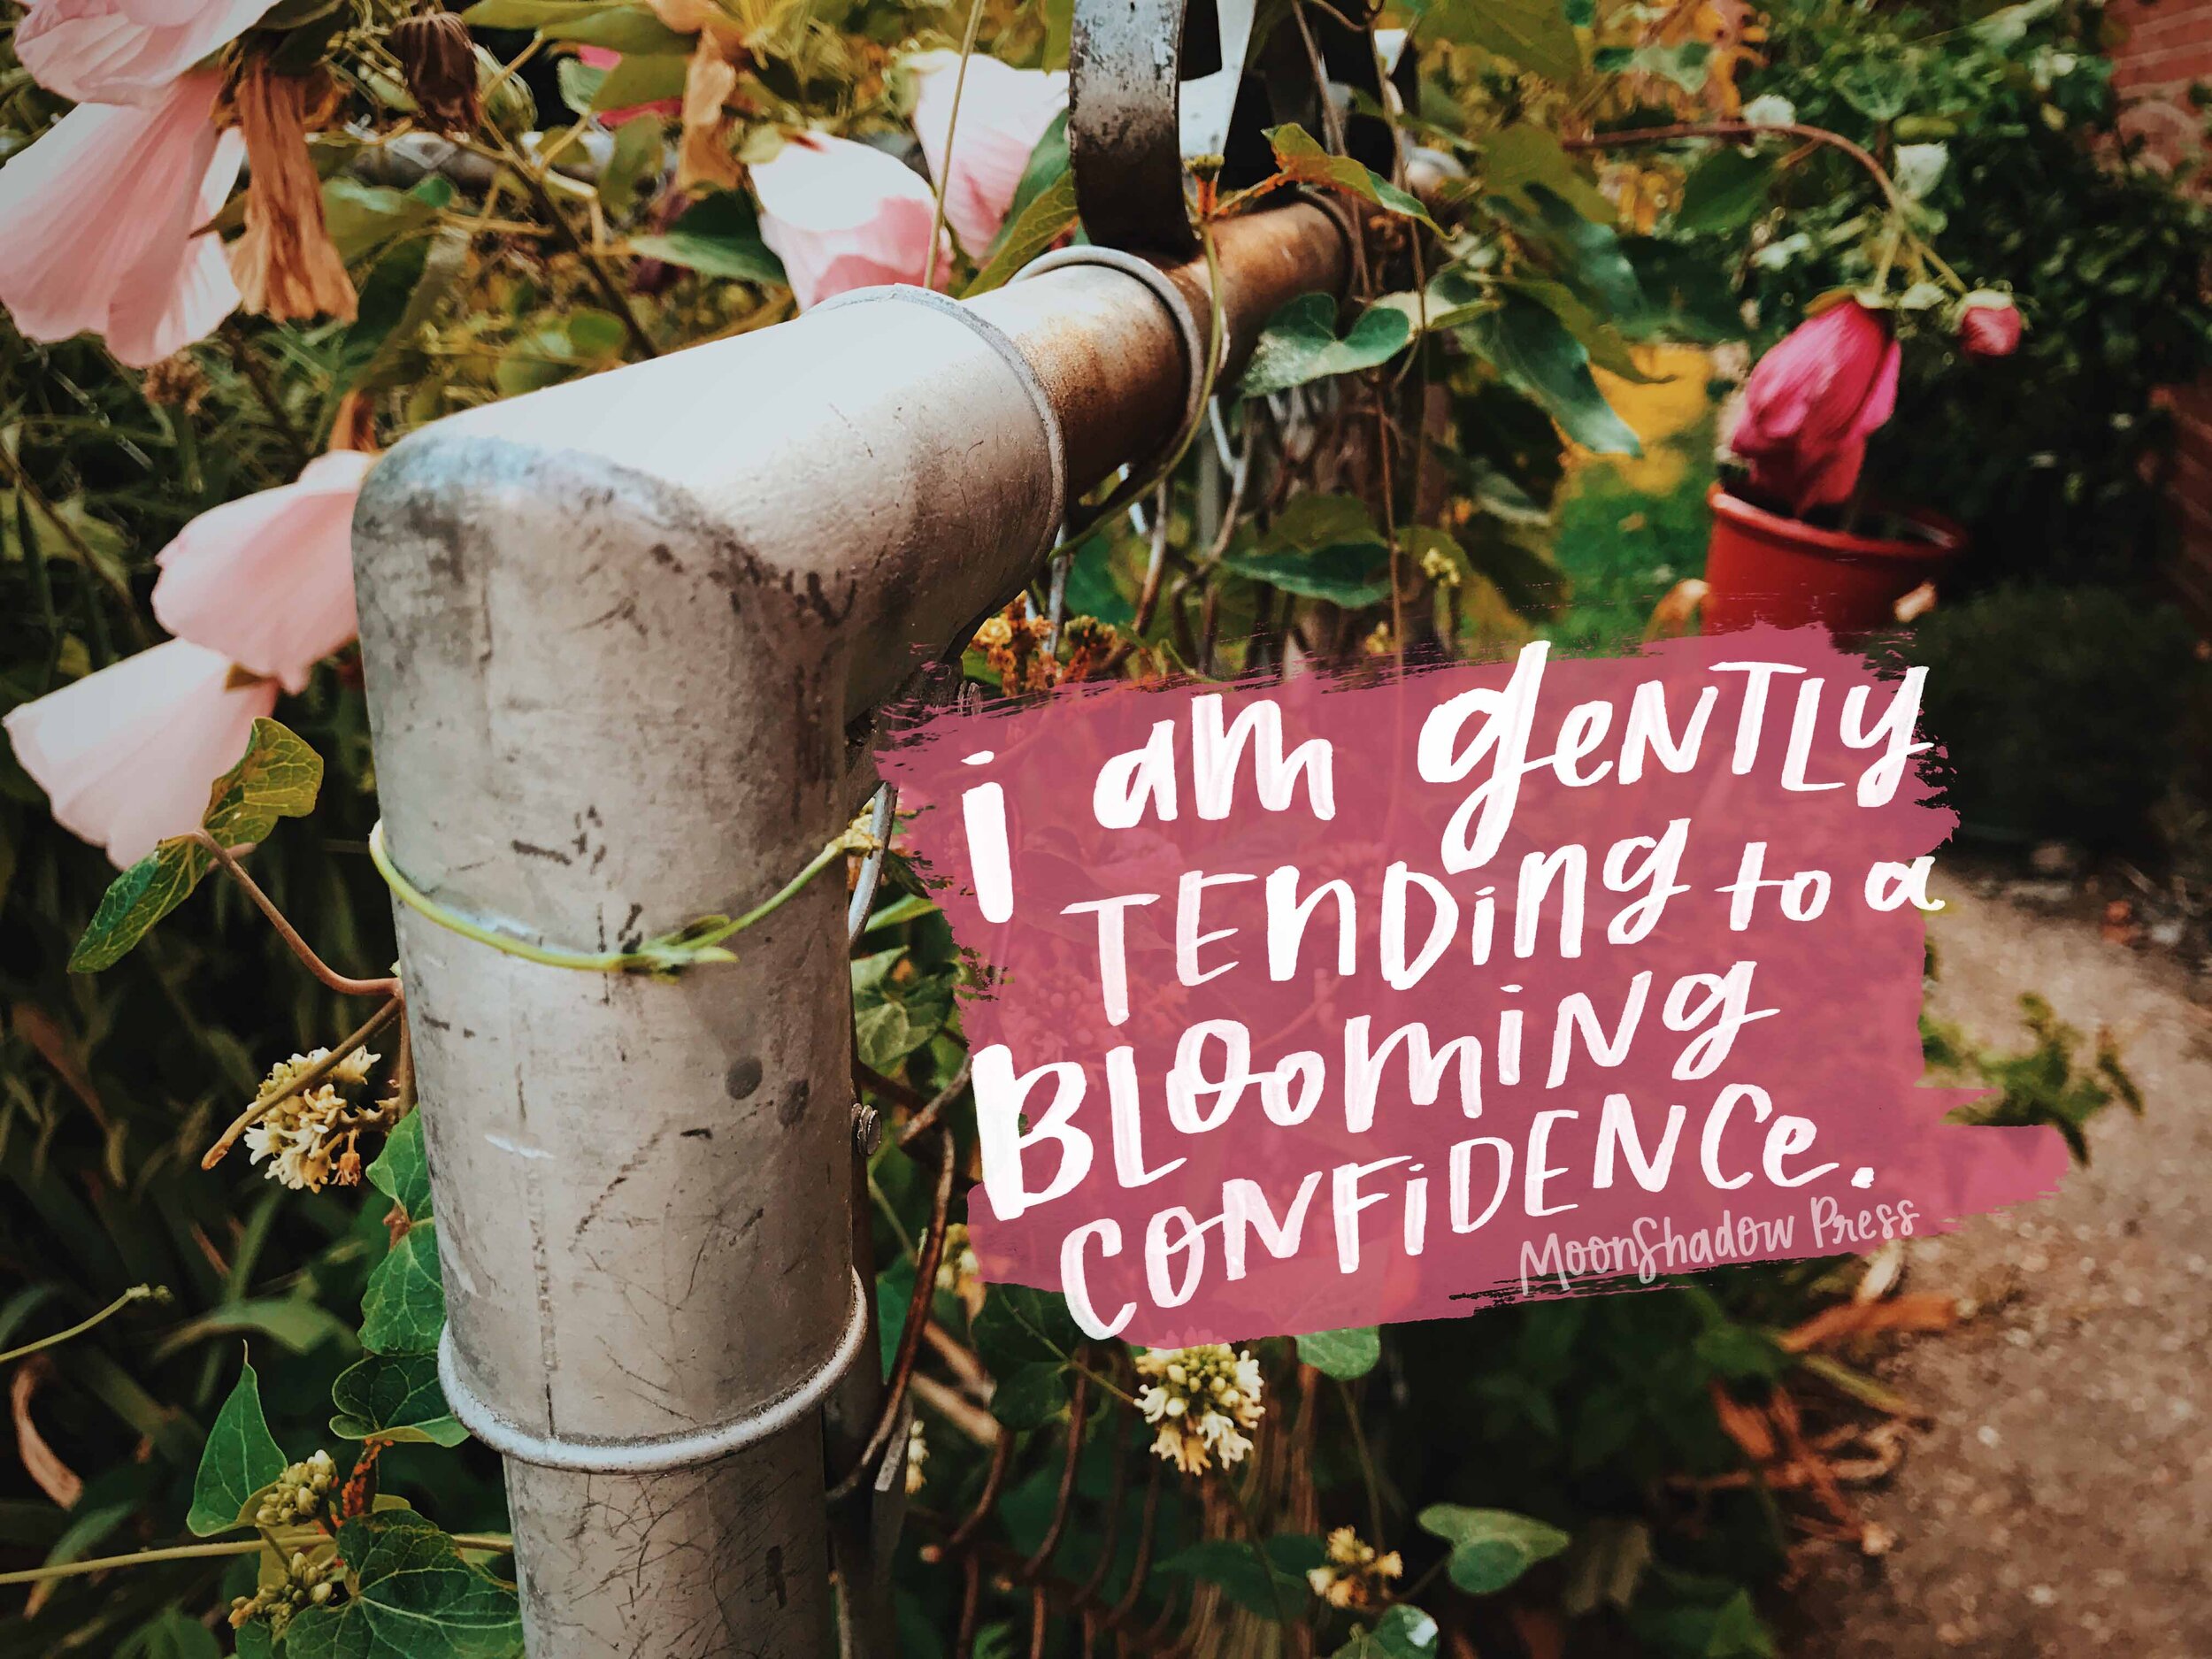 BloomingConfidence1L.jpg